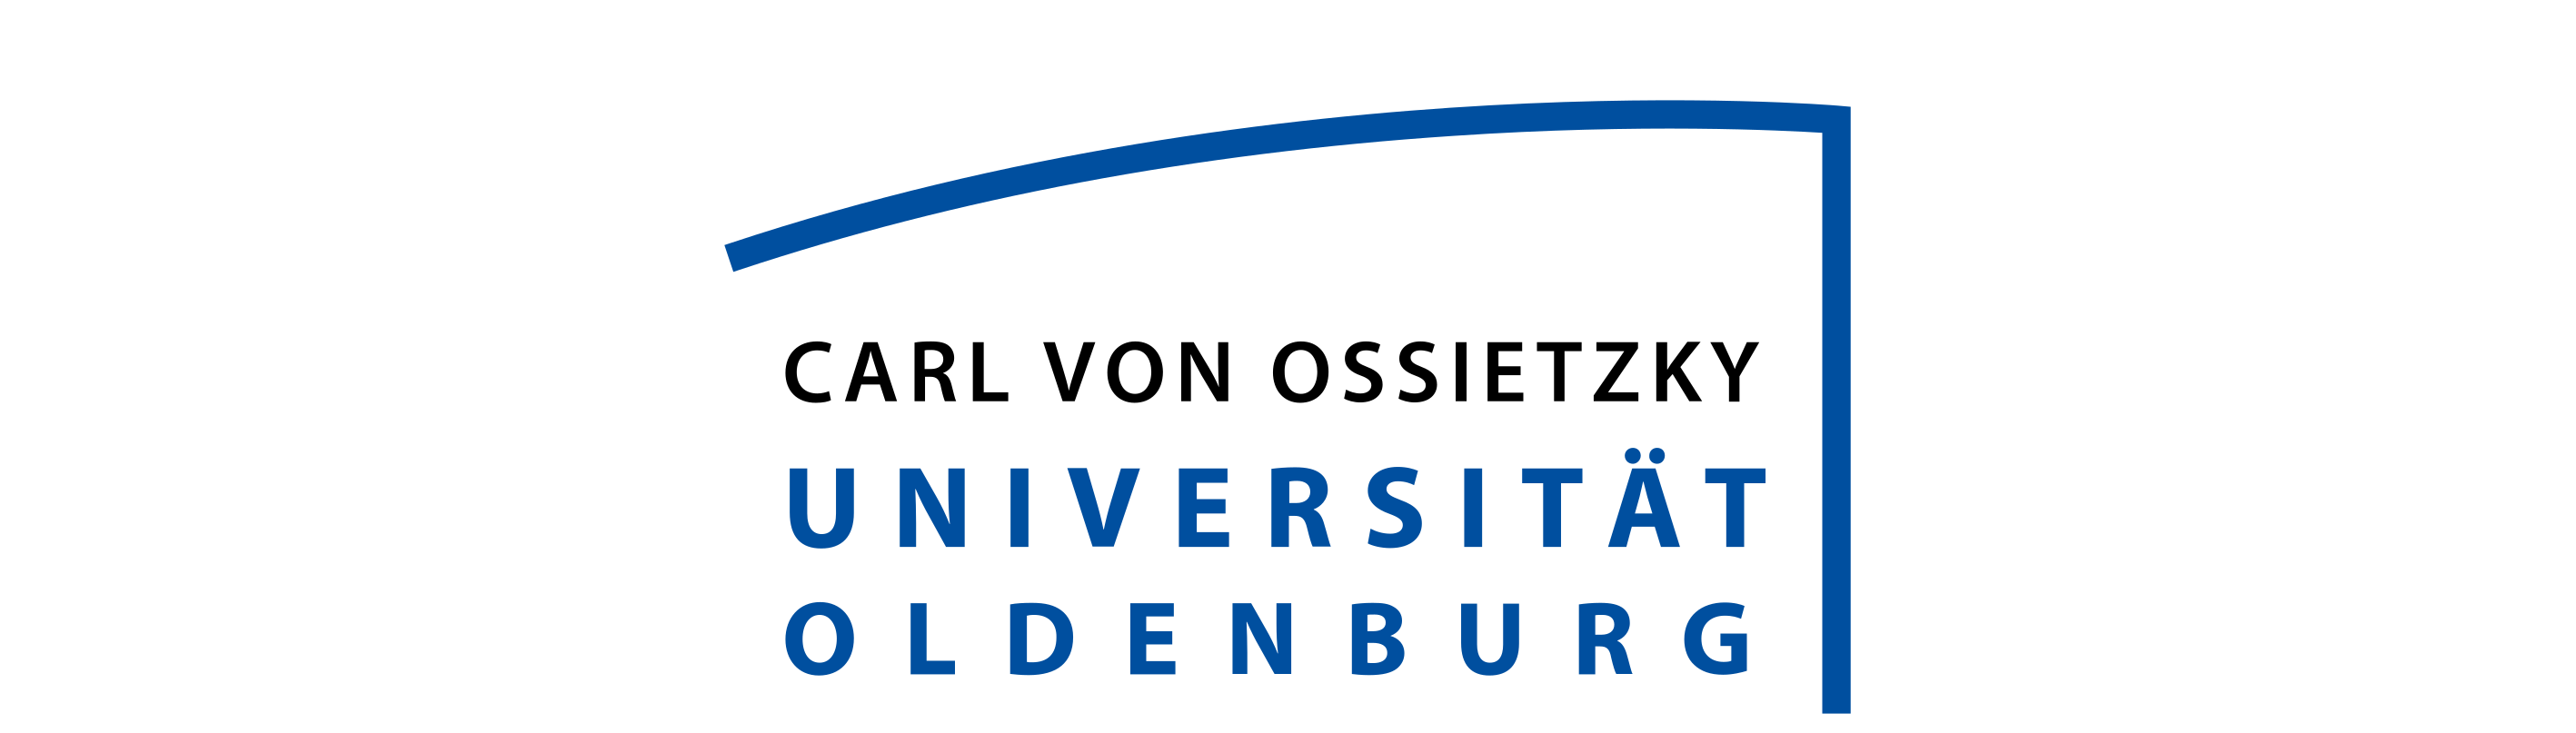 Universitåt Oldenburg logo